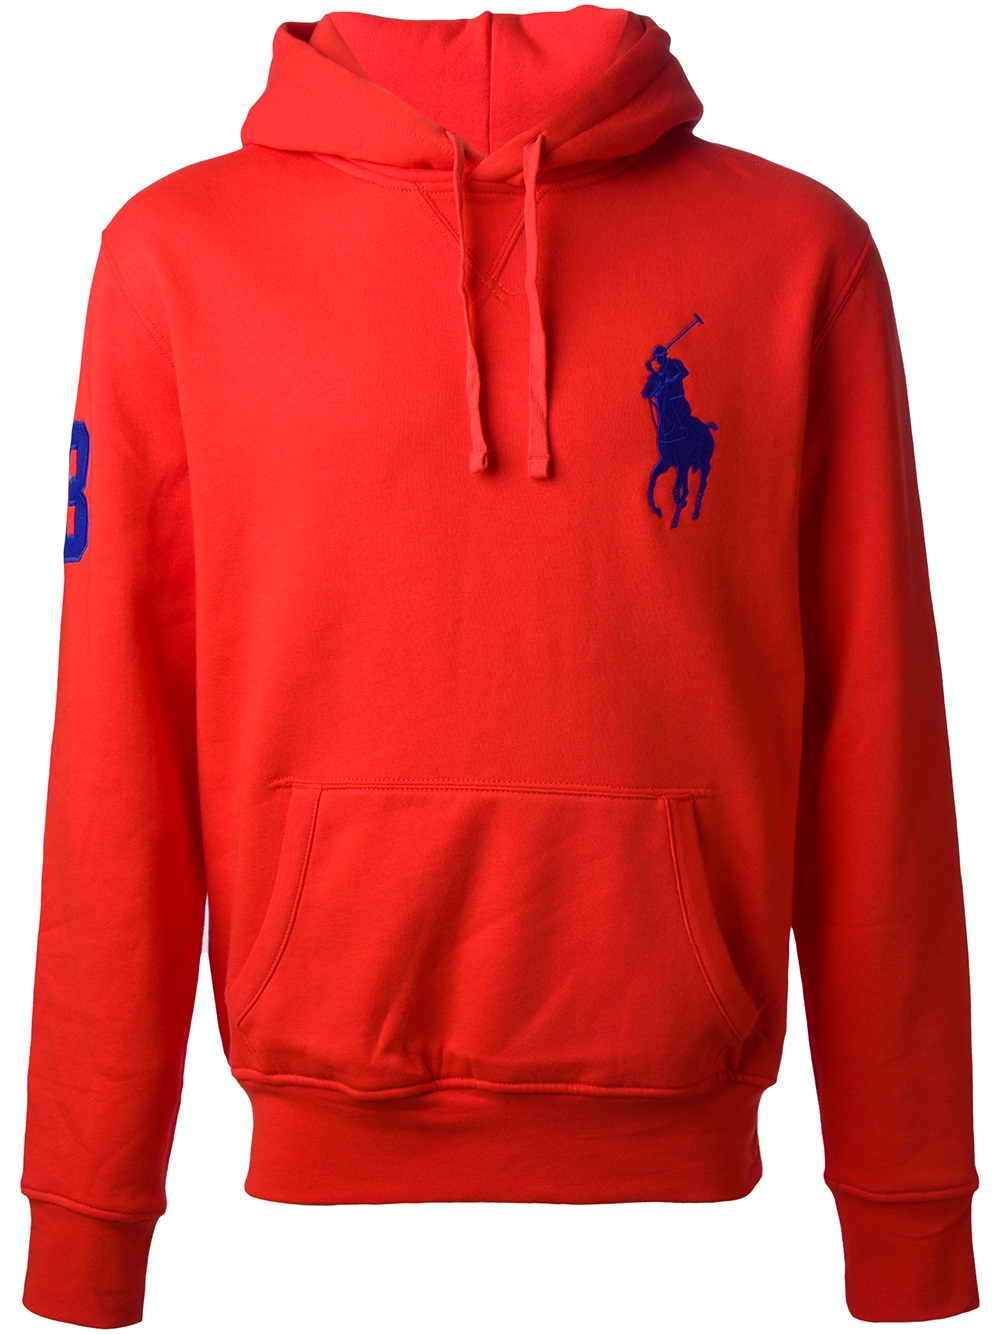 Lyst - Polo ralph lauren Logo Hoodie in Red for Men